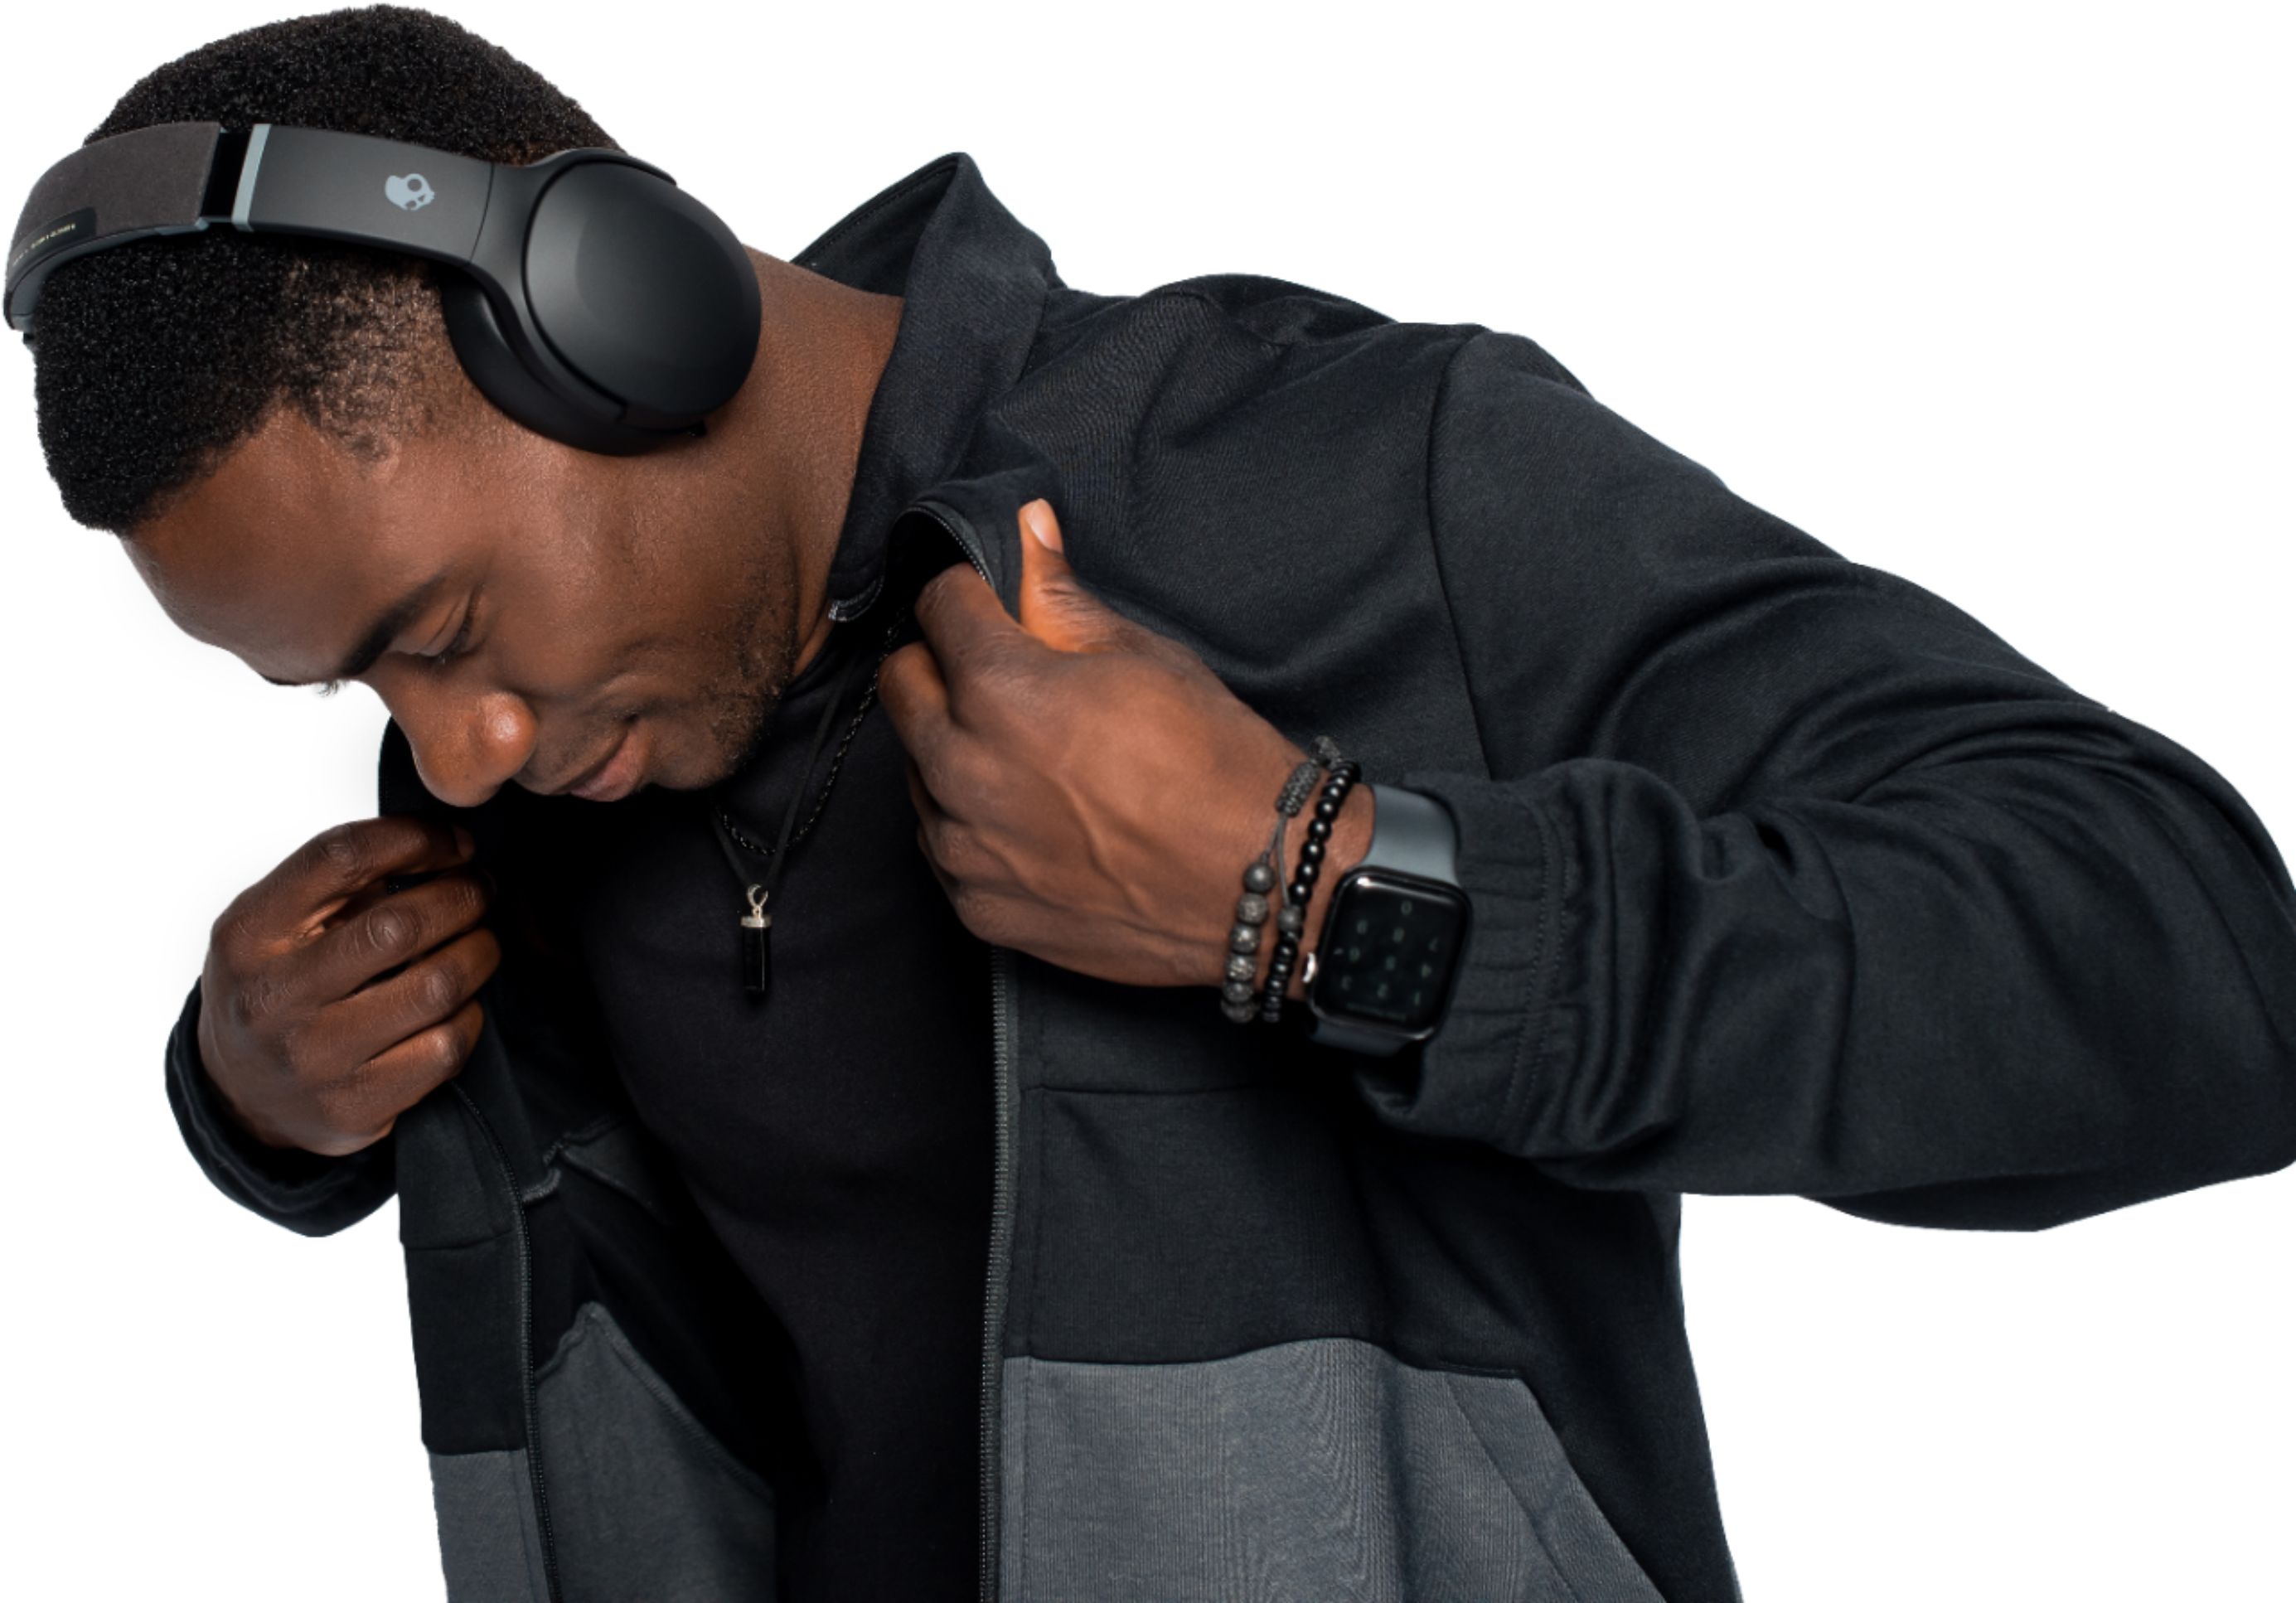 Skullcandy Crusher Evo Over-the-Ear Wireless Headphones True Black  S6EVW-N740 - Best Buy